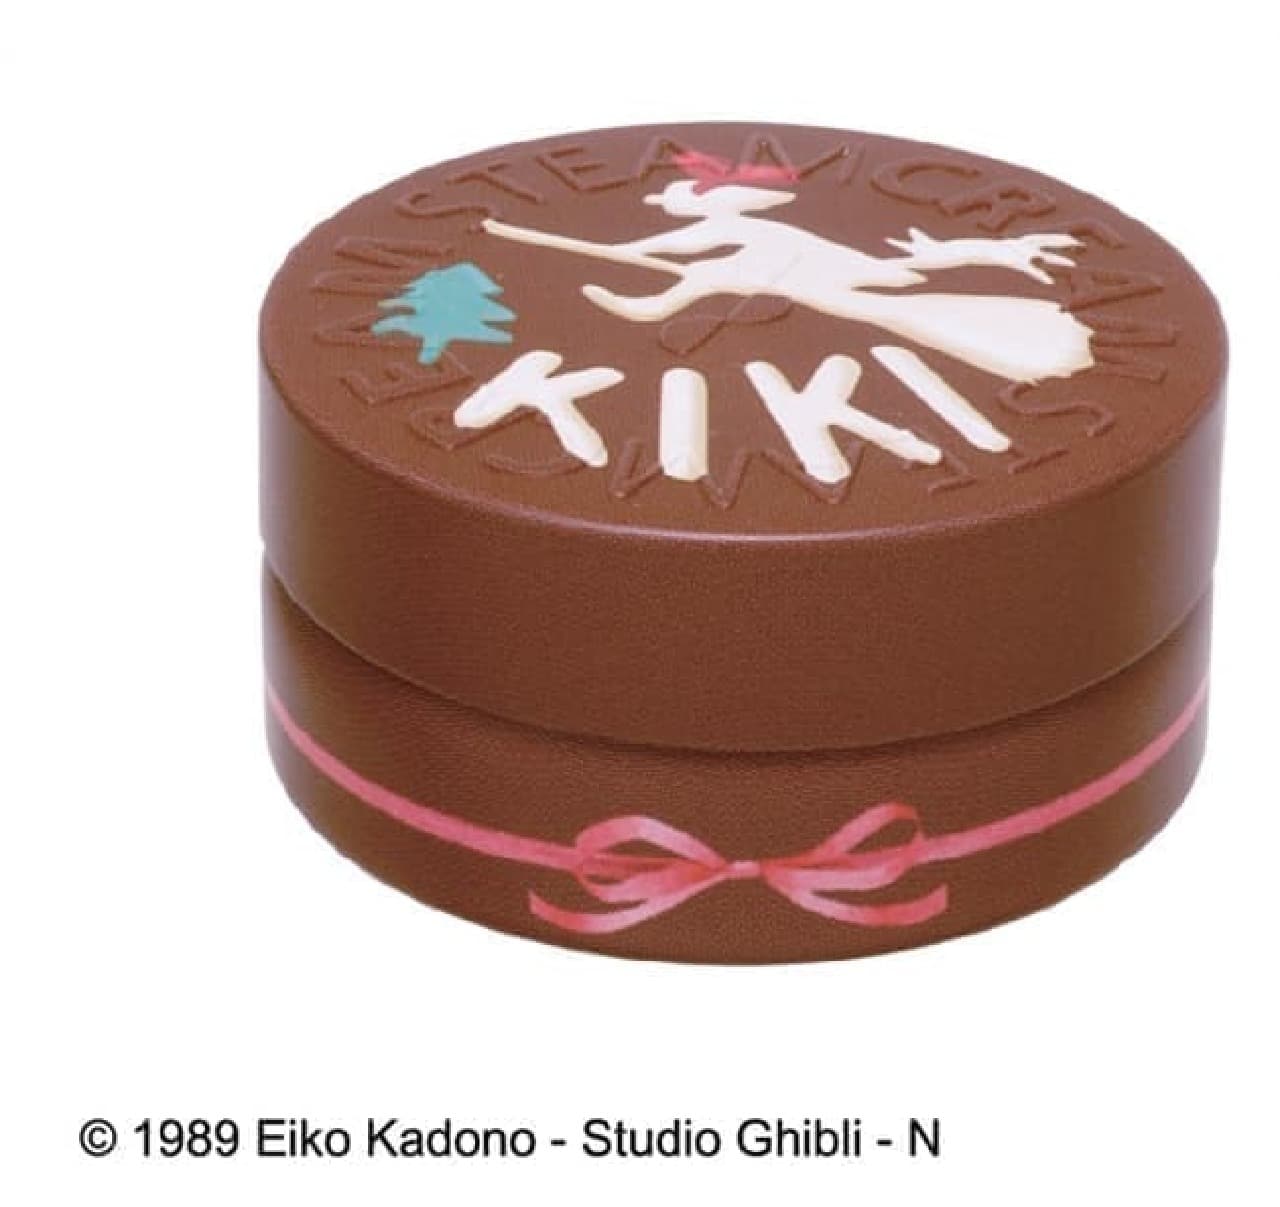 New product "Kiki chocolate cake series" from Donguri Closet of the Donguri Republic